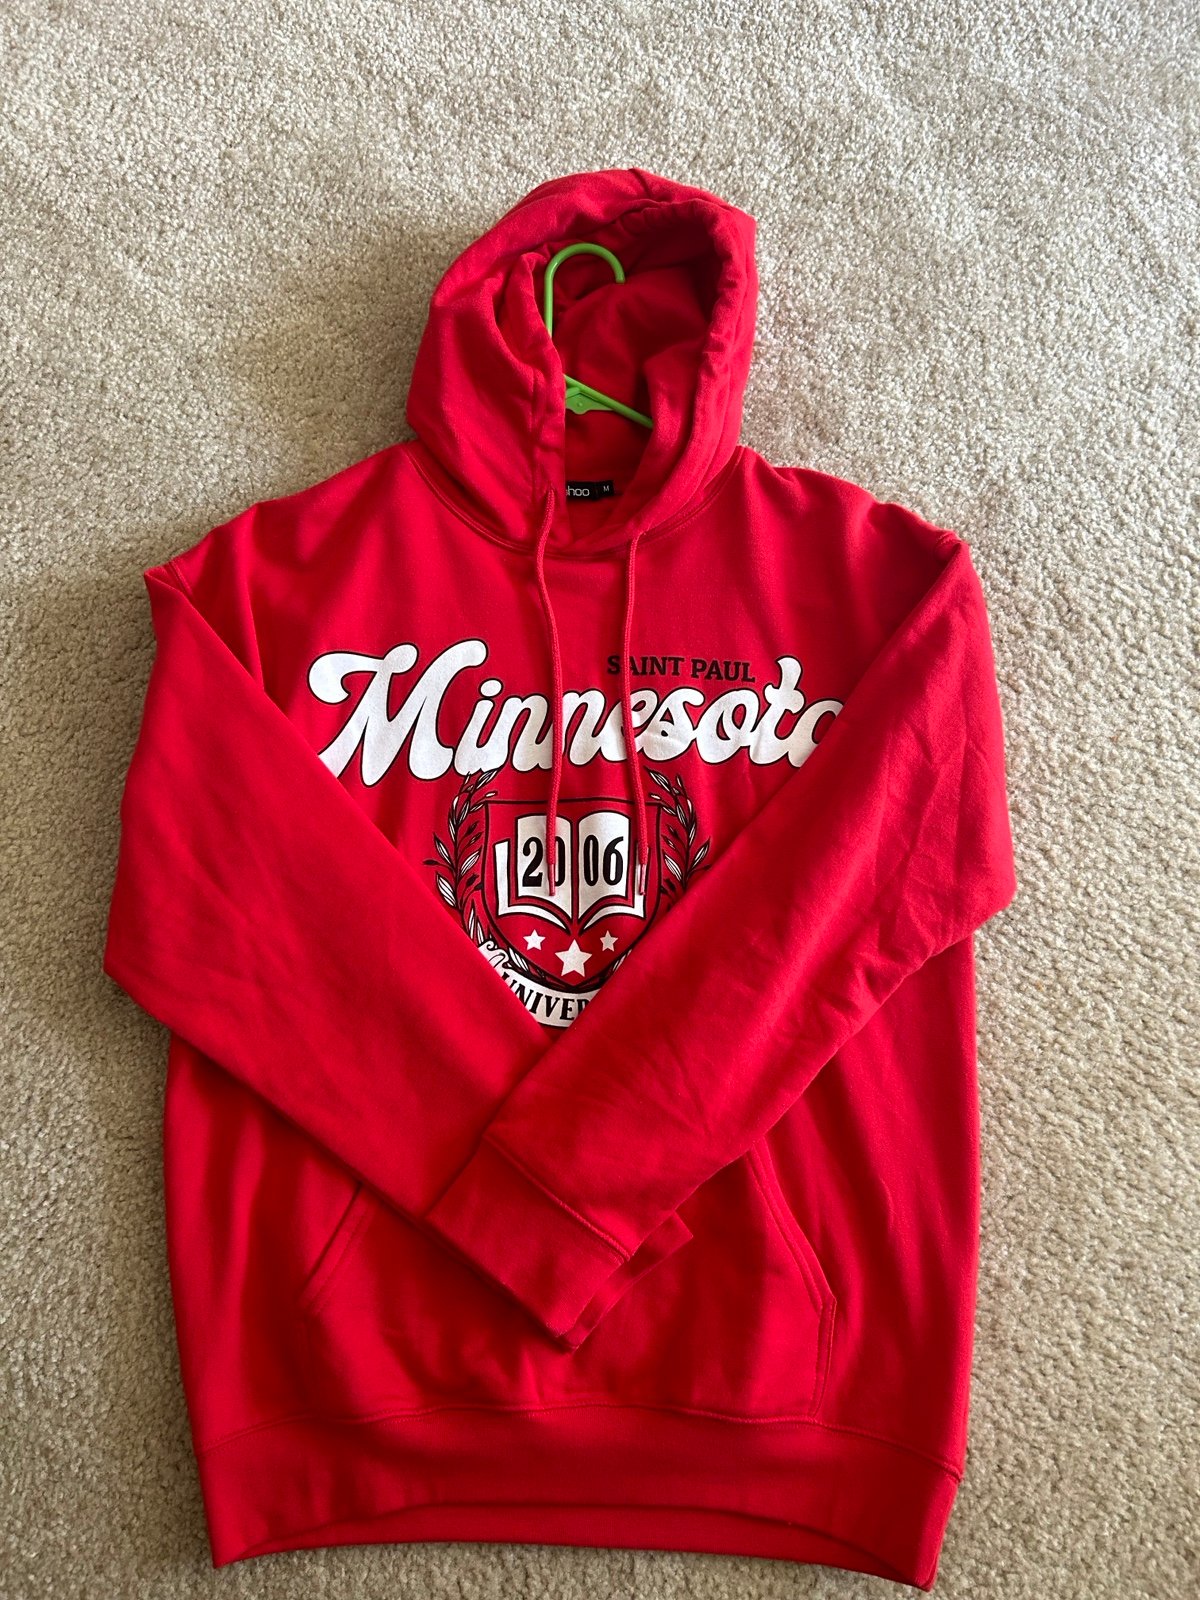 Amazing Minnesota red hoodie iaYEpJu4K Hot Sale